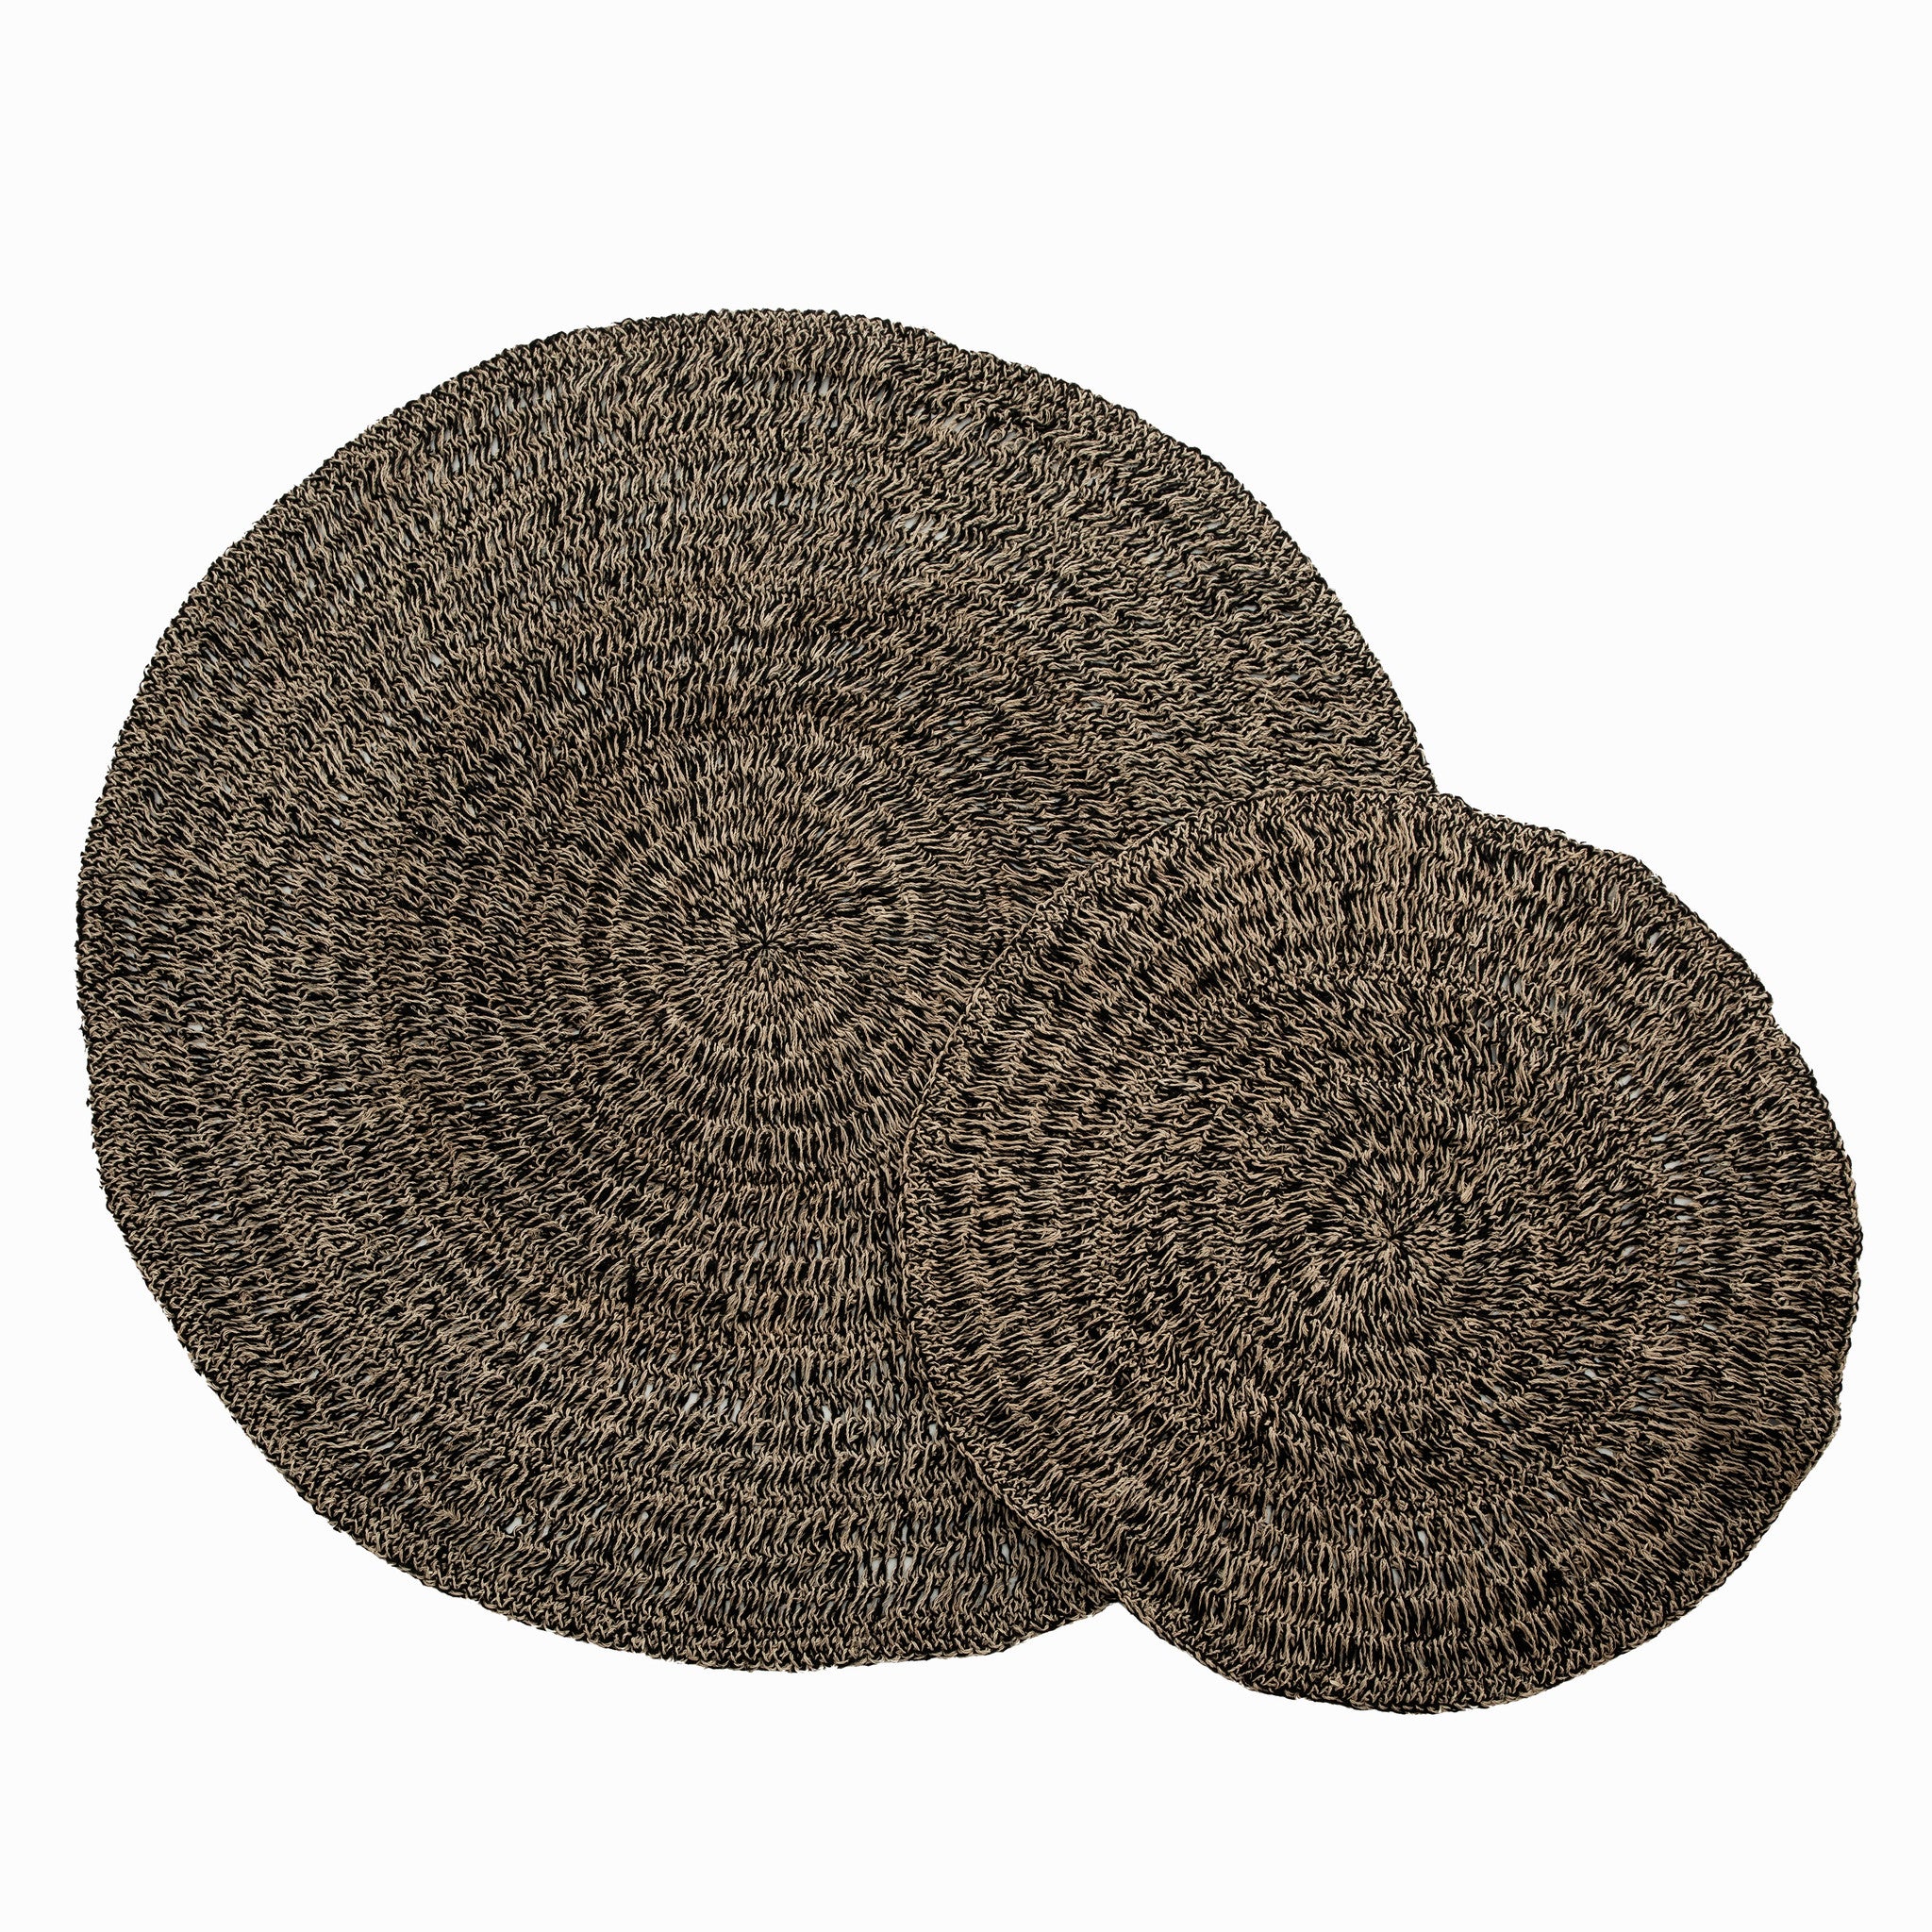 Seagrass carpet - Natural black - 200